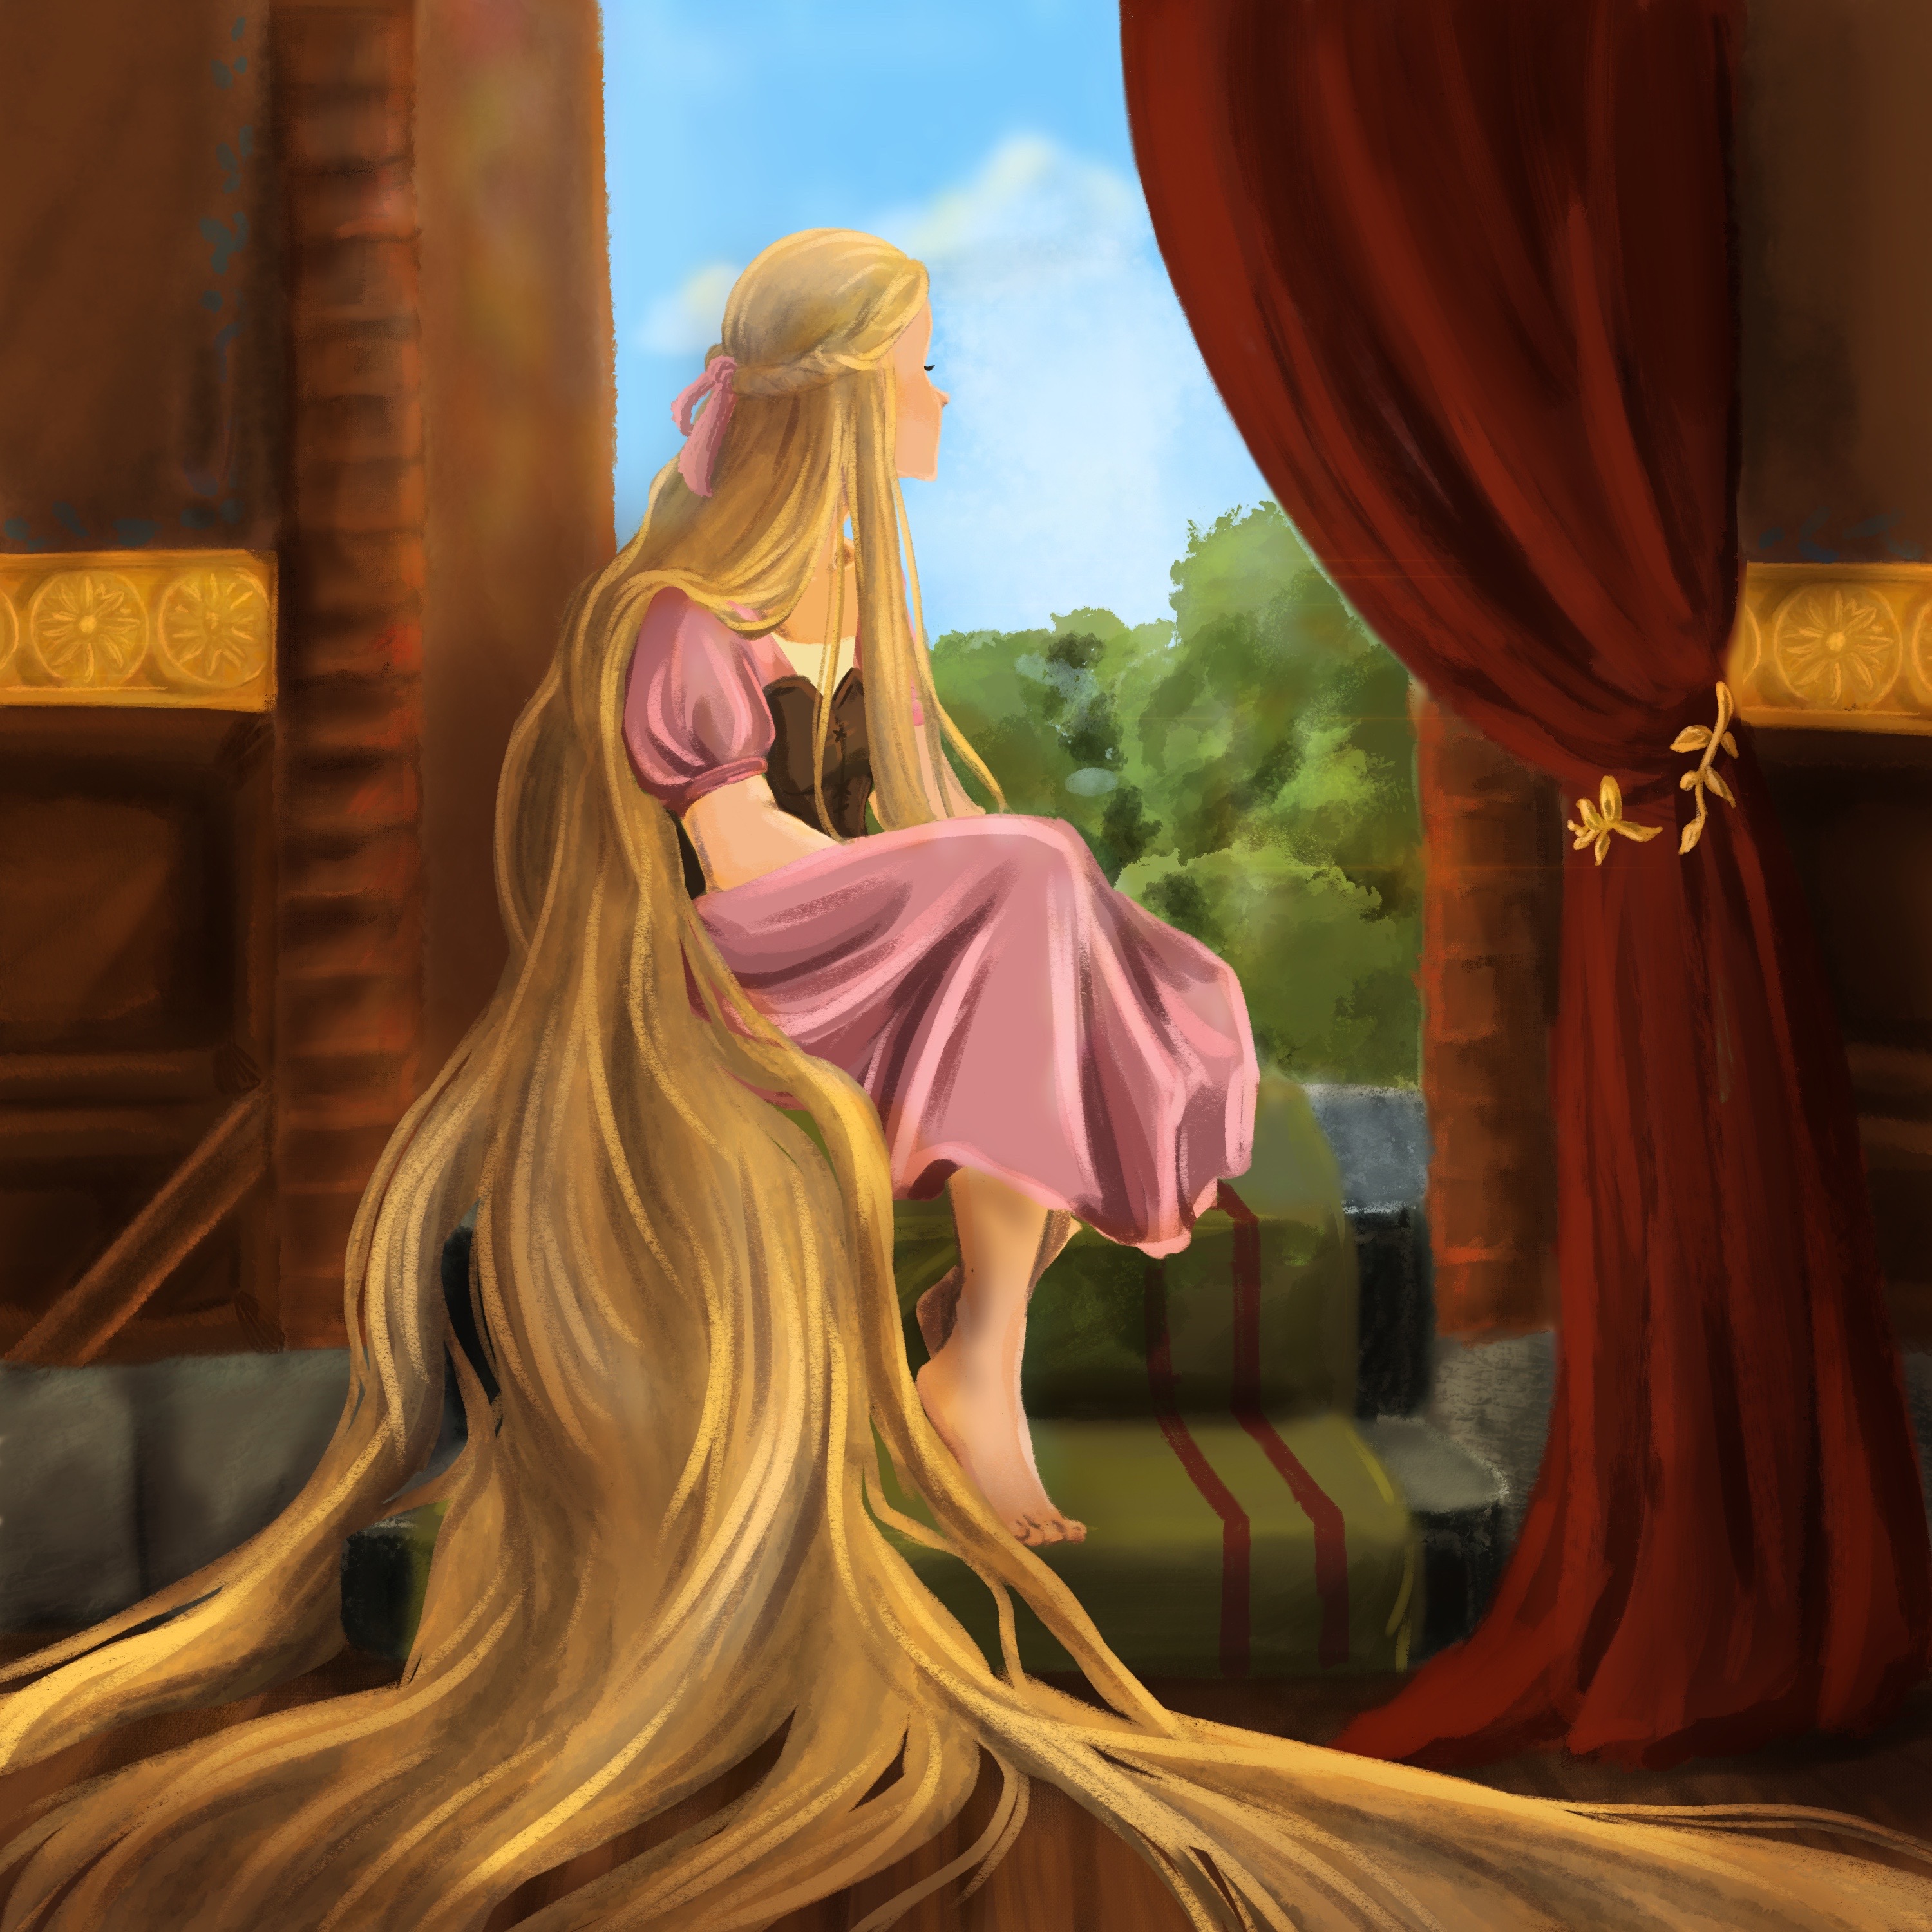 Rapunzel by Ellinor Sutt - On Art and Creating as we get Older